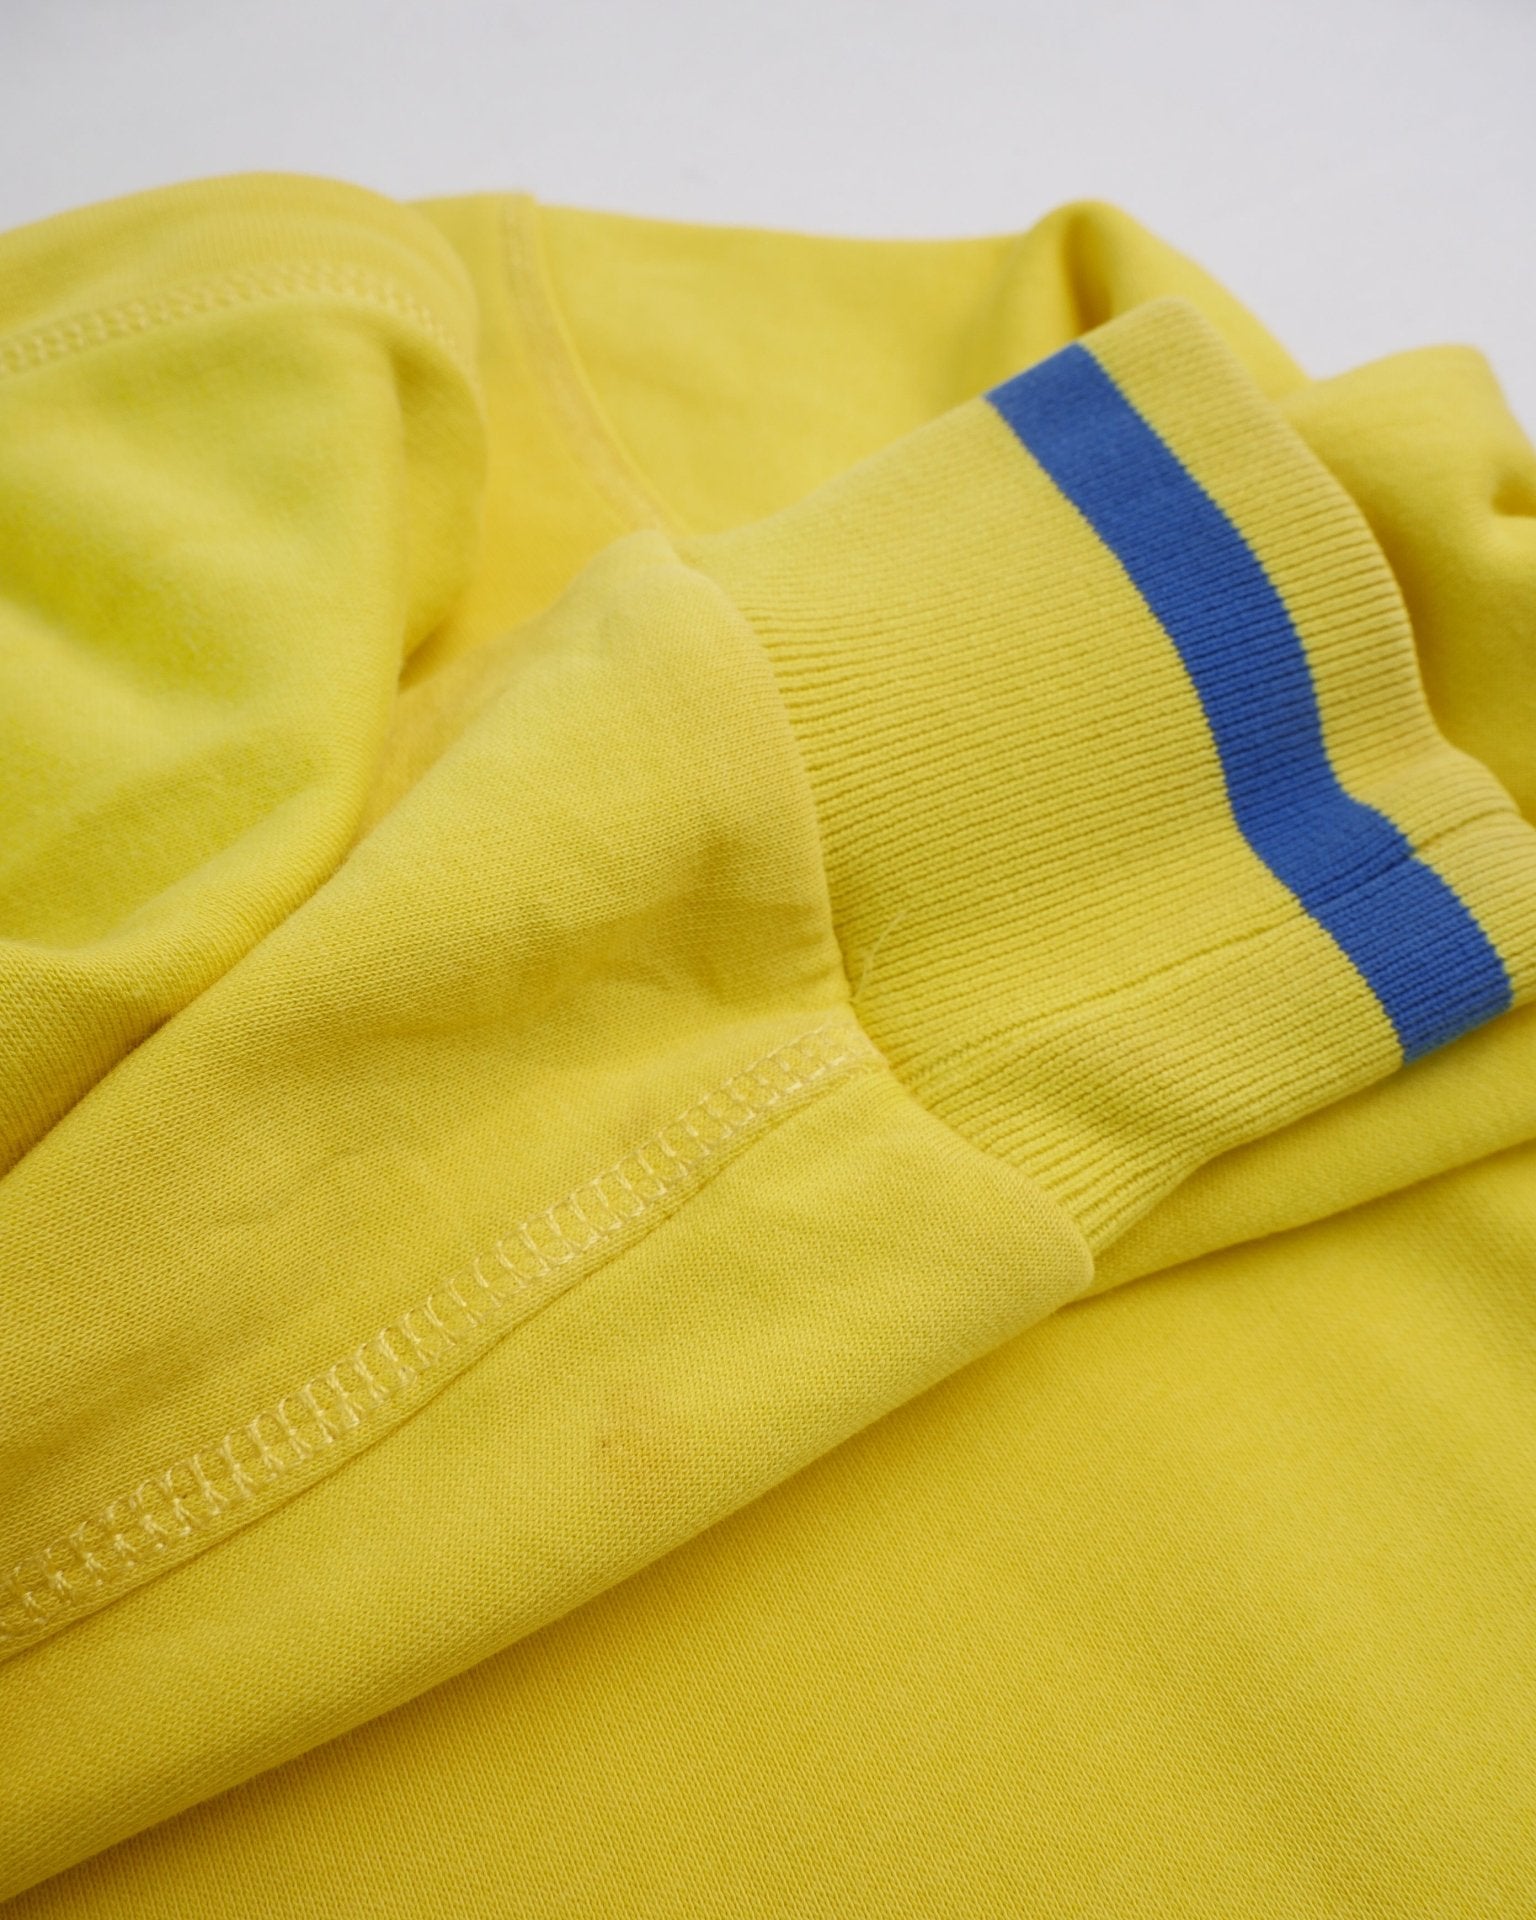 Puma Sweden embroidered Logo yellow Zip Hoodie - Peeces